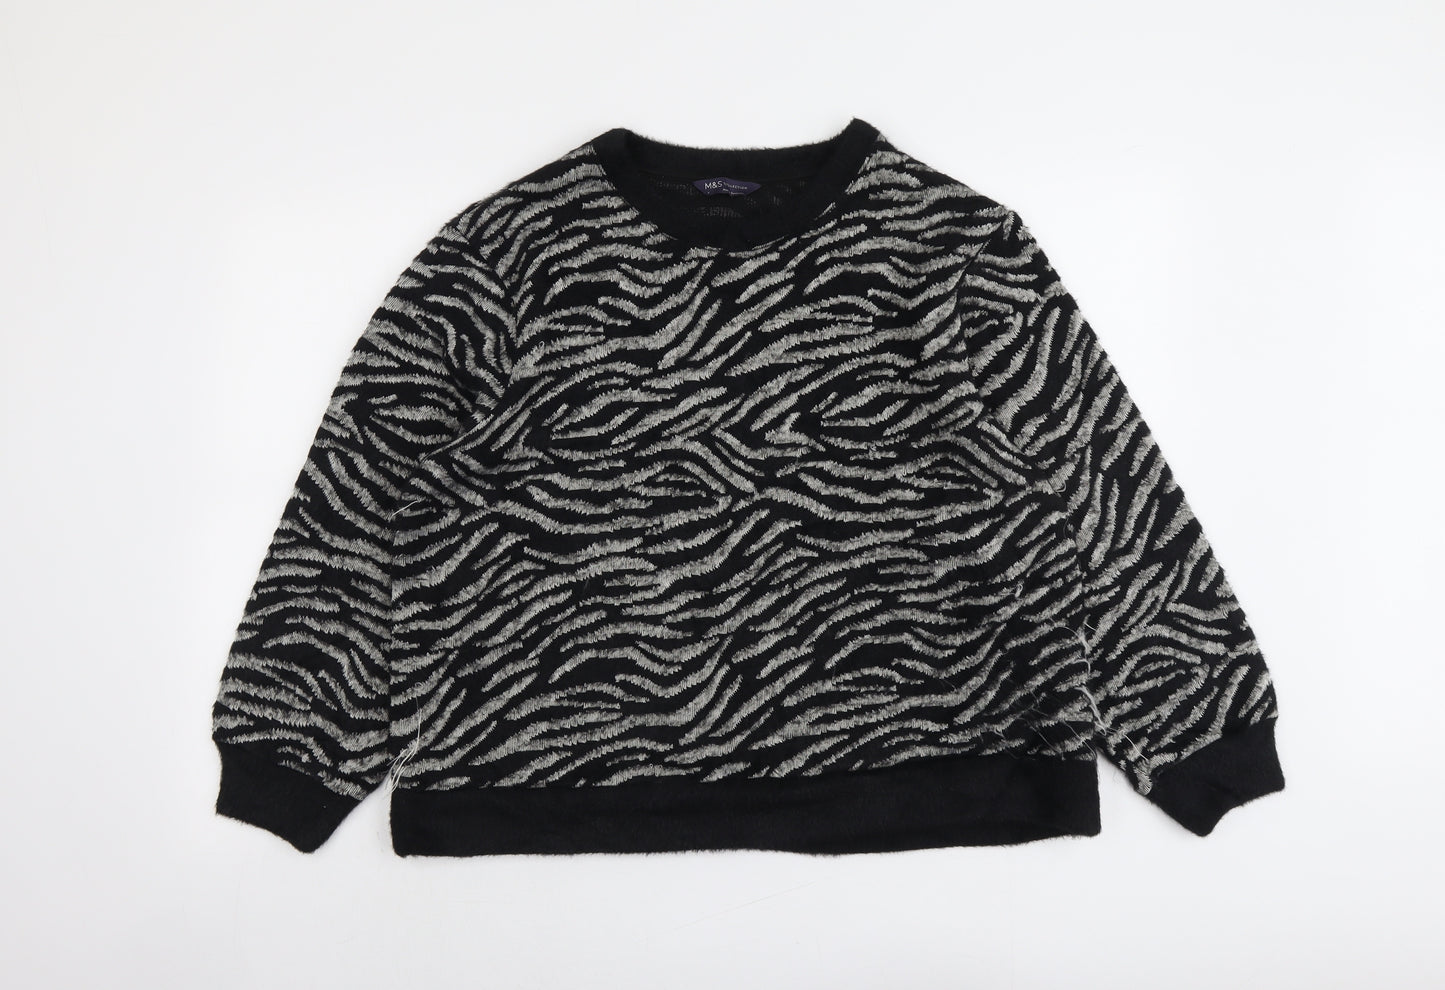 Marks and Spencer Womens Black Round Neck Animal Print Polyamide Pullover Jumper Size L - Tiger Print